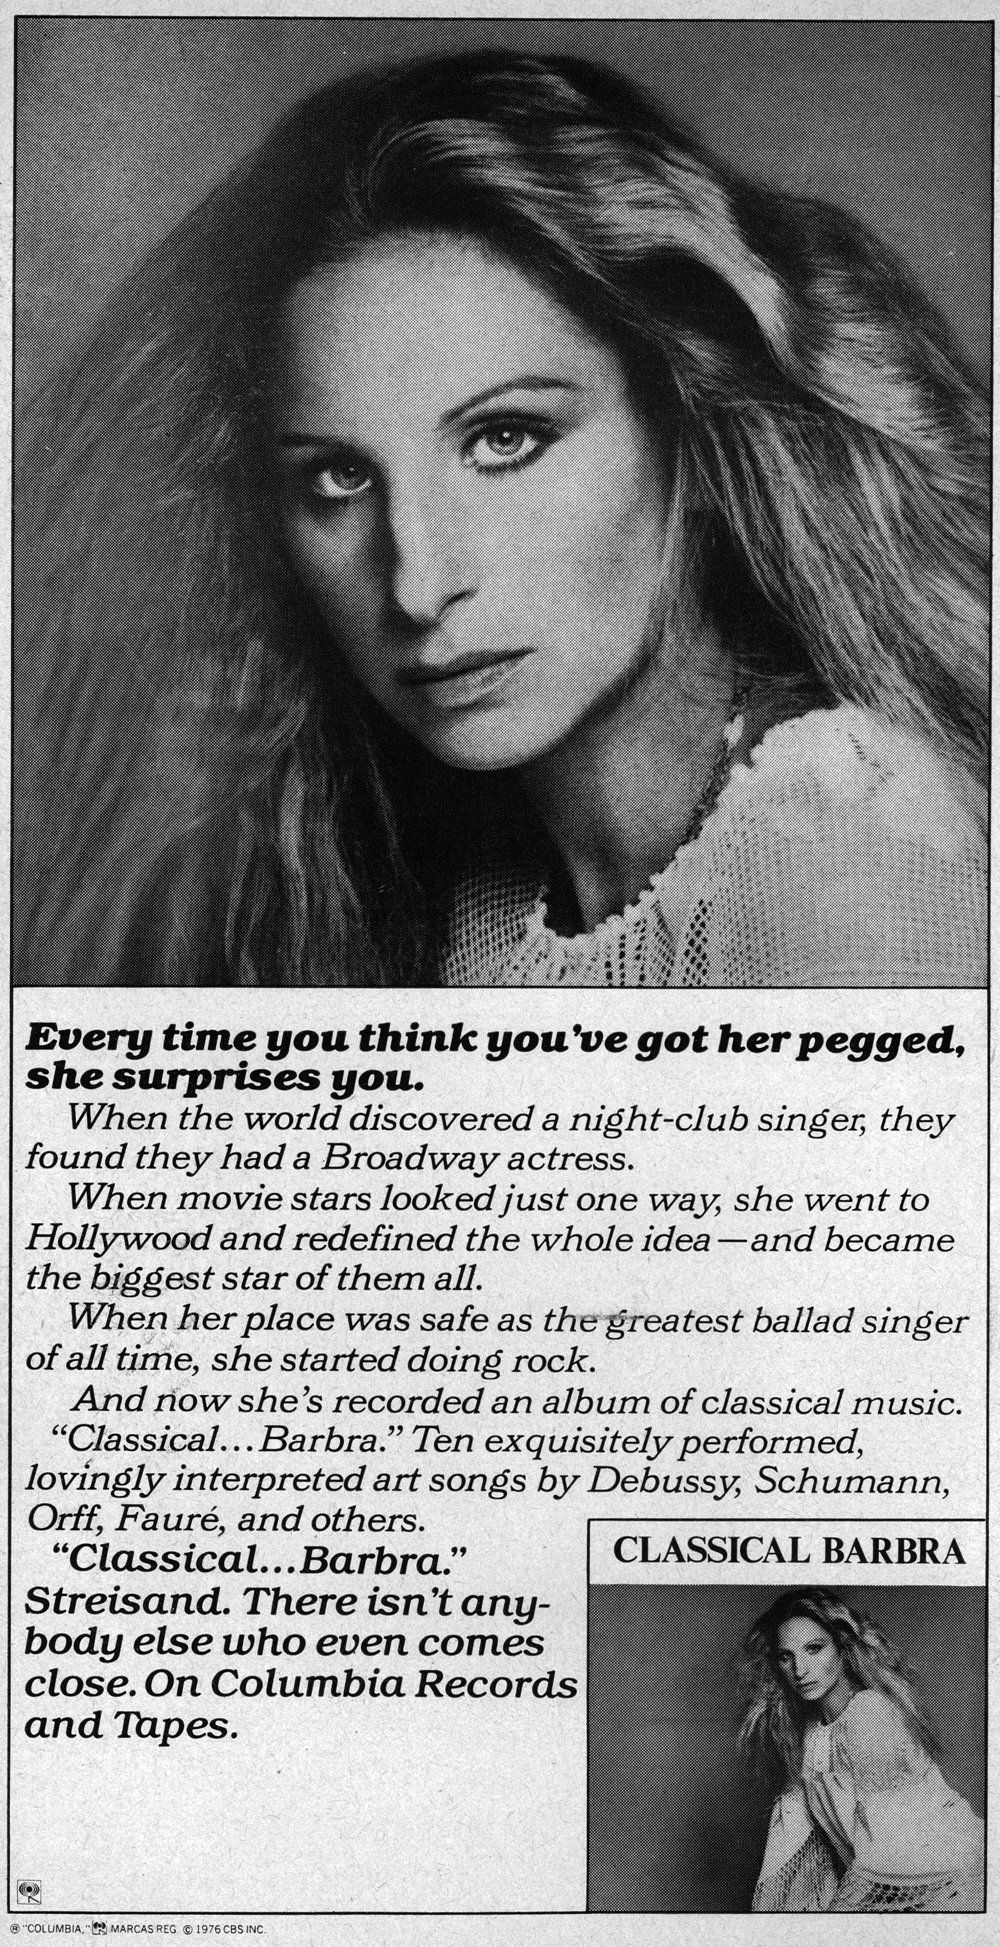 An ad for Streisand's album, Classical Barbra.